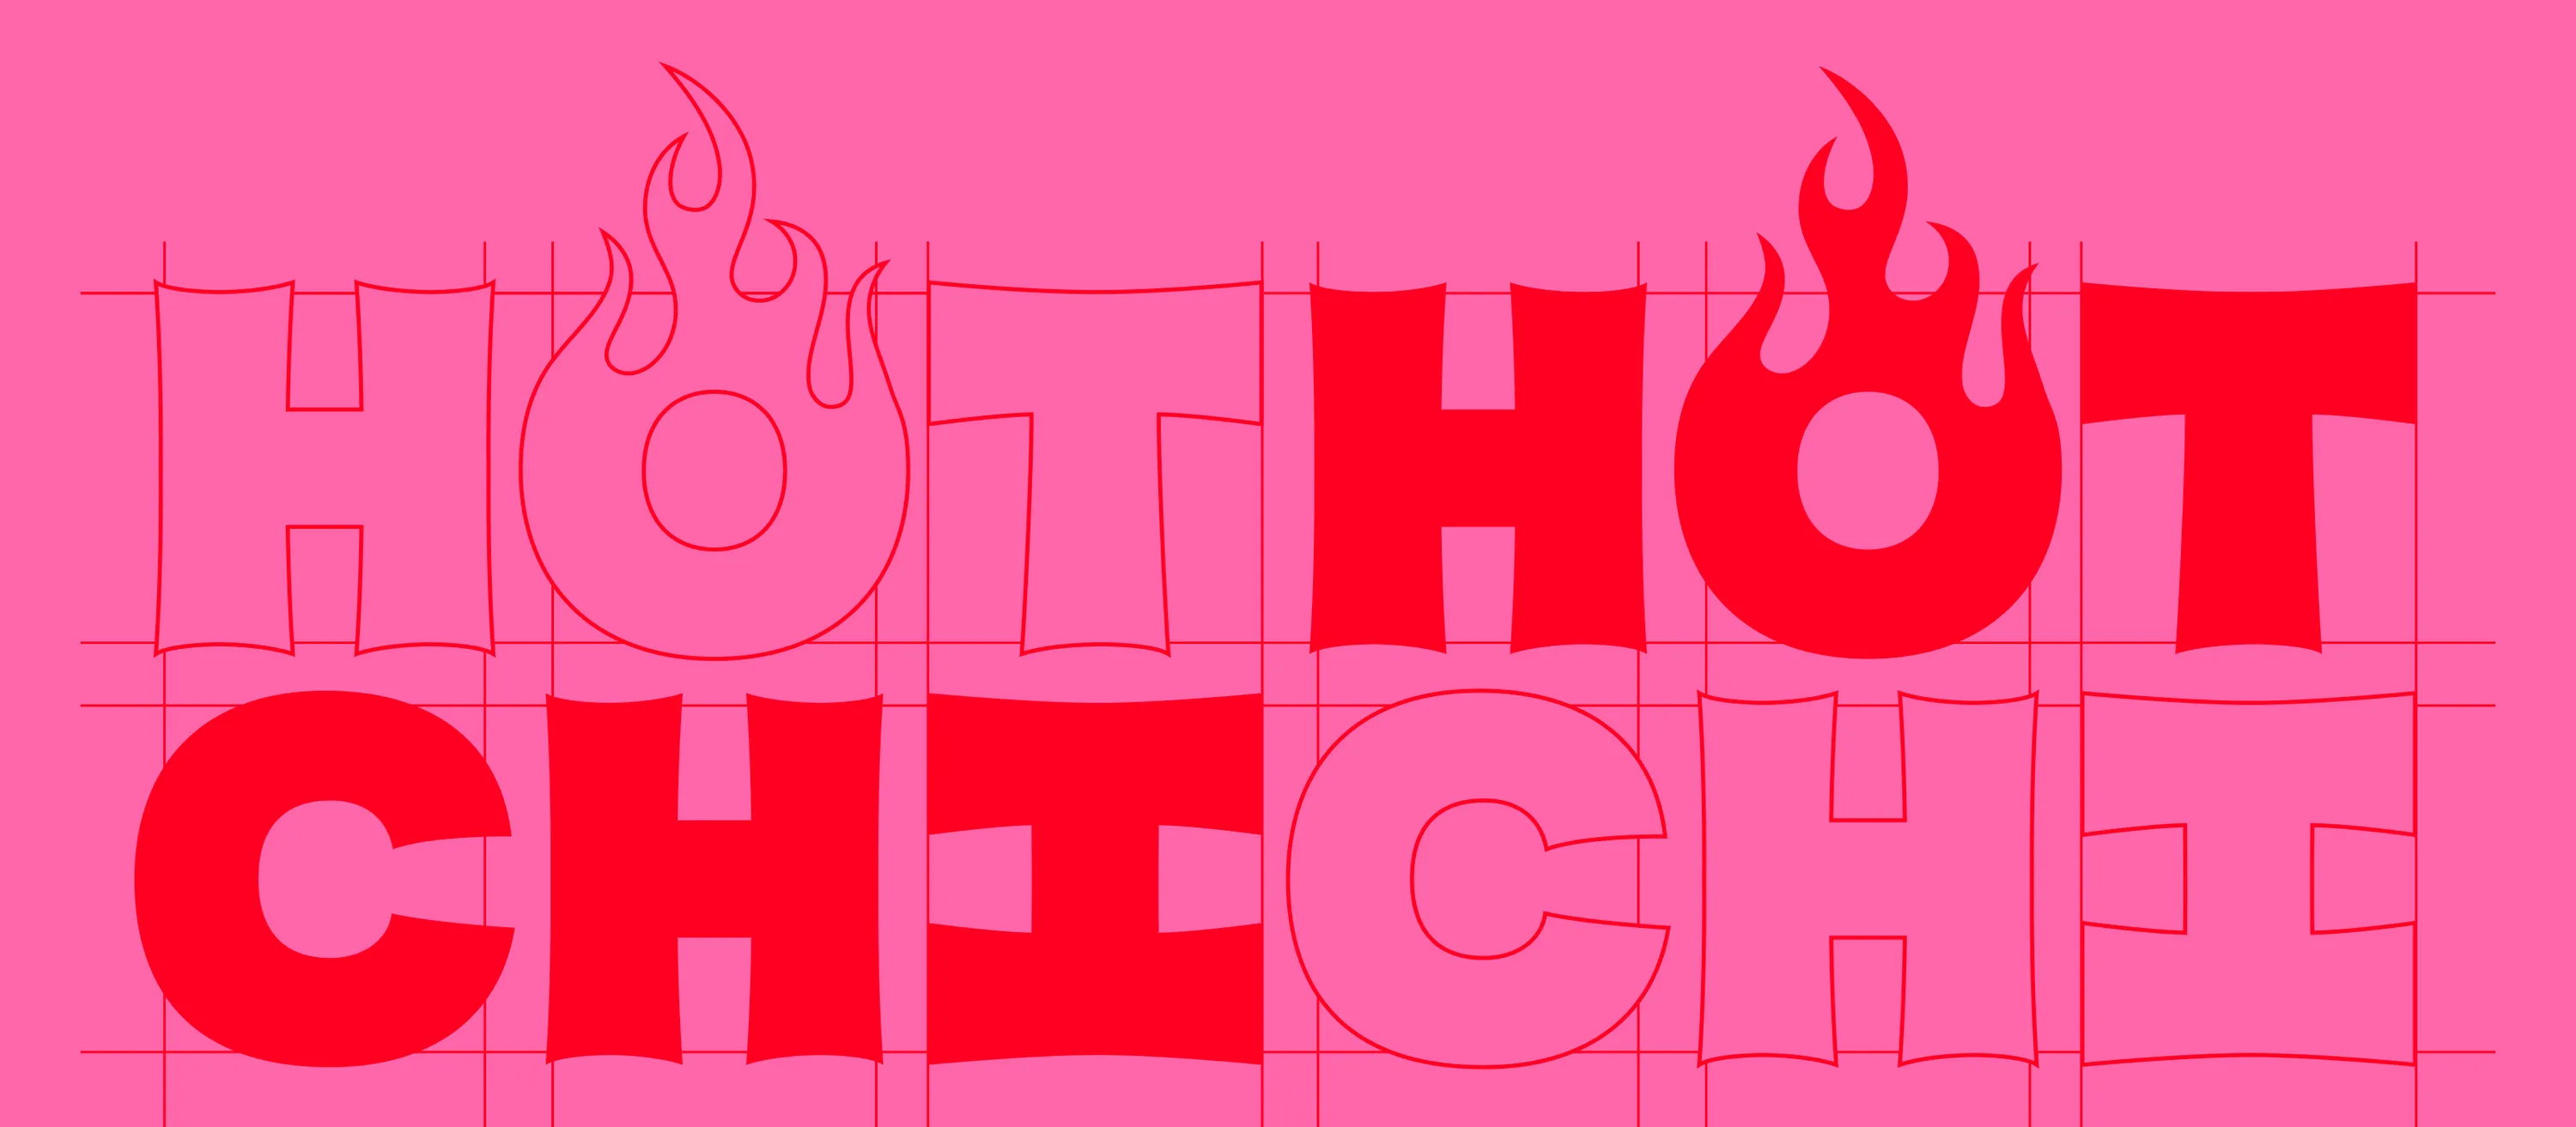 Hot Chi Chicago Hot Chicken Branding Graphic Design 02 logorational